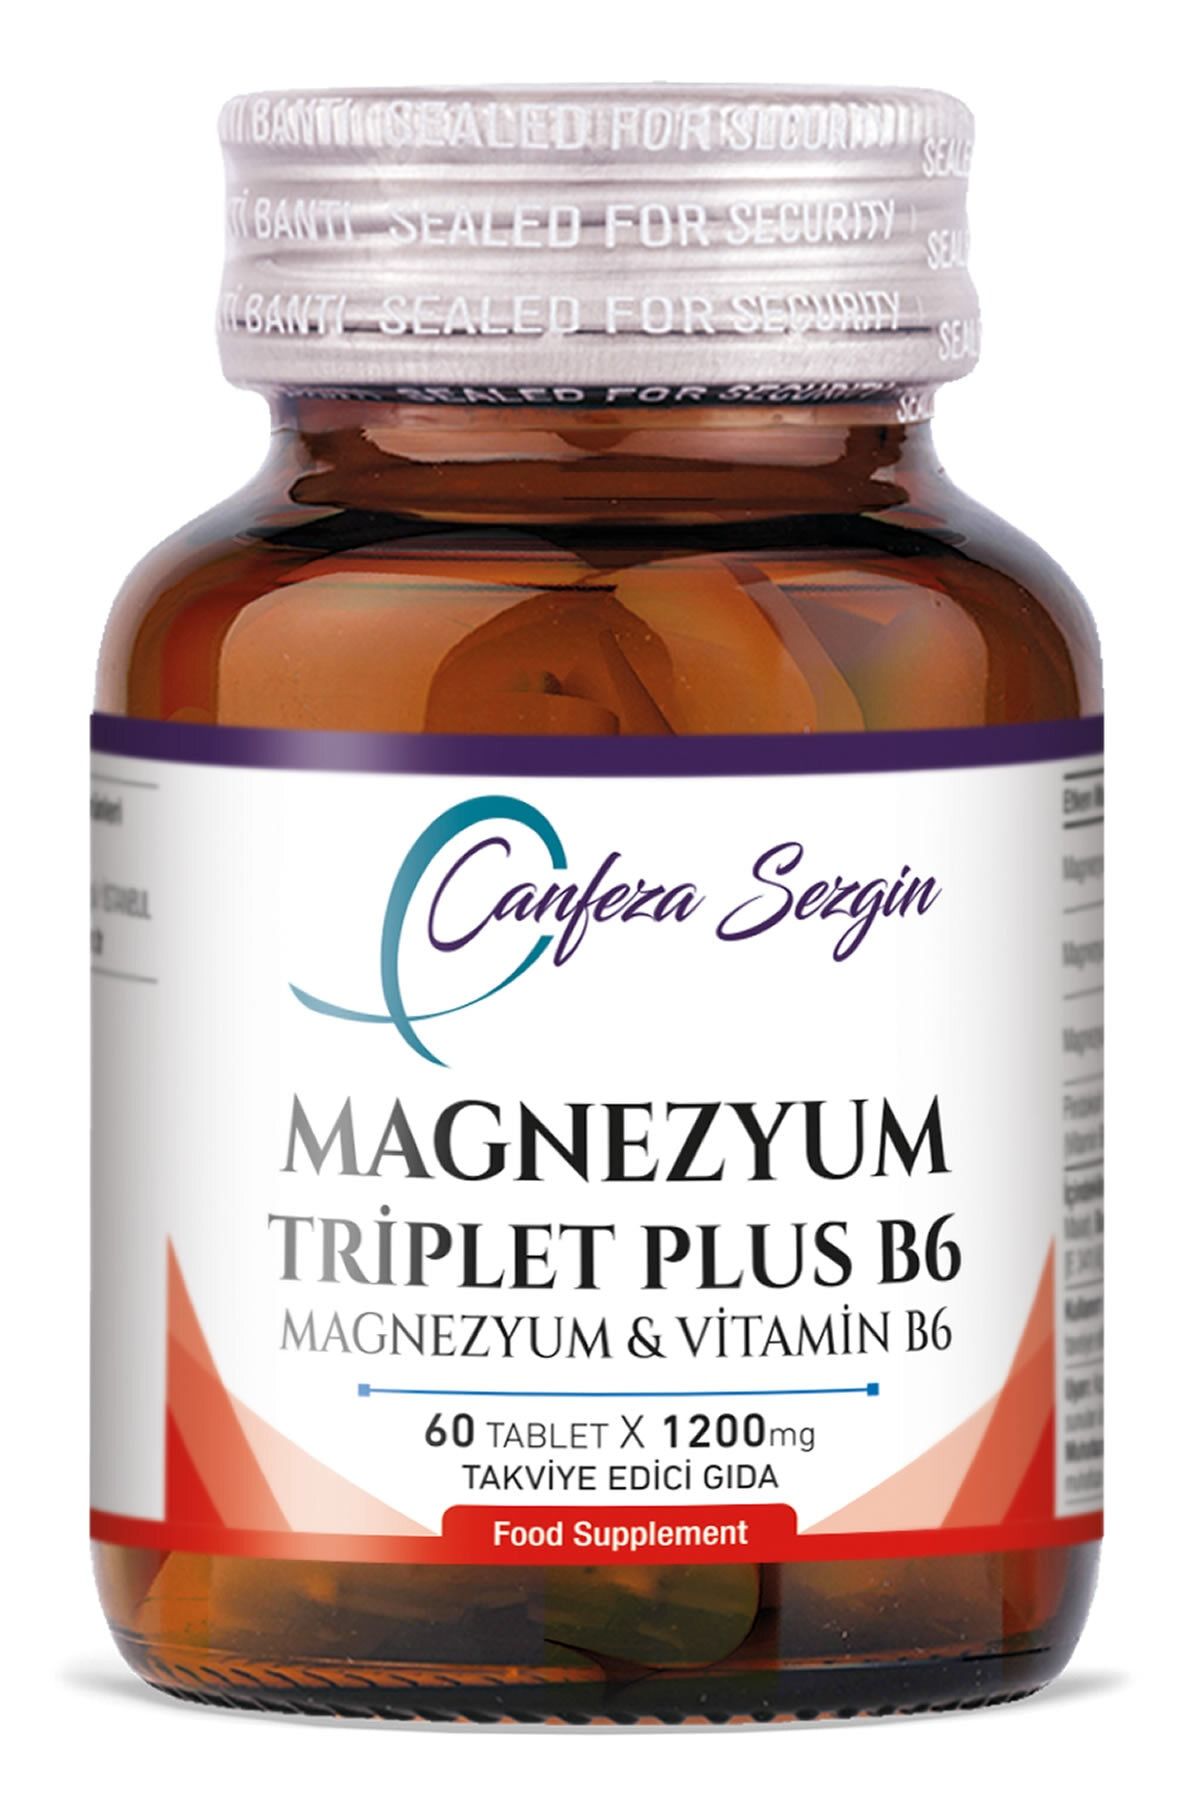 Canfeza Sezgin Magnezyum Triplet Plus B6 Magnezyum & Vitamin B6